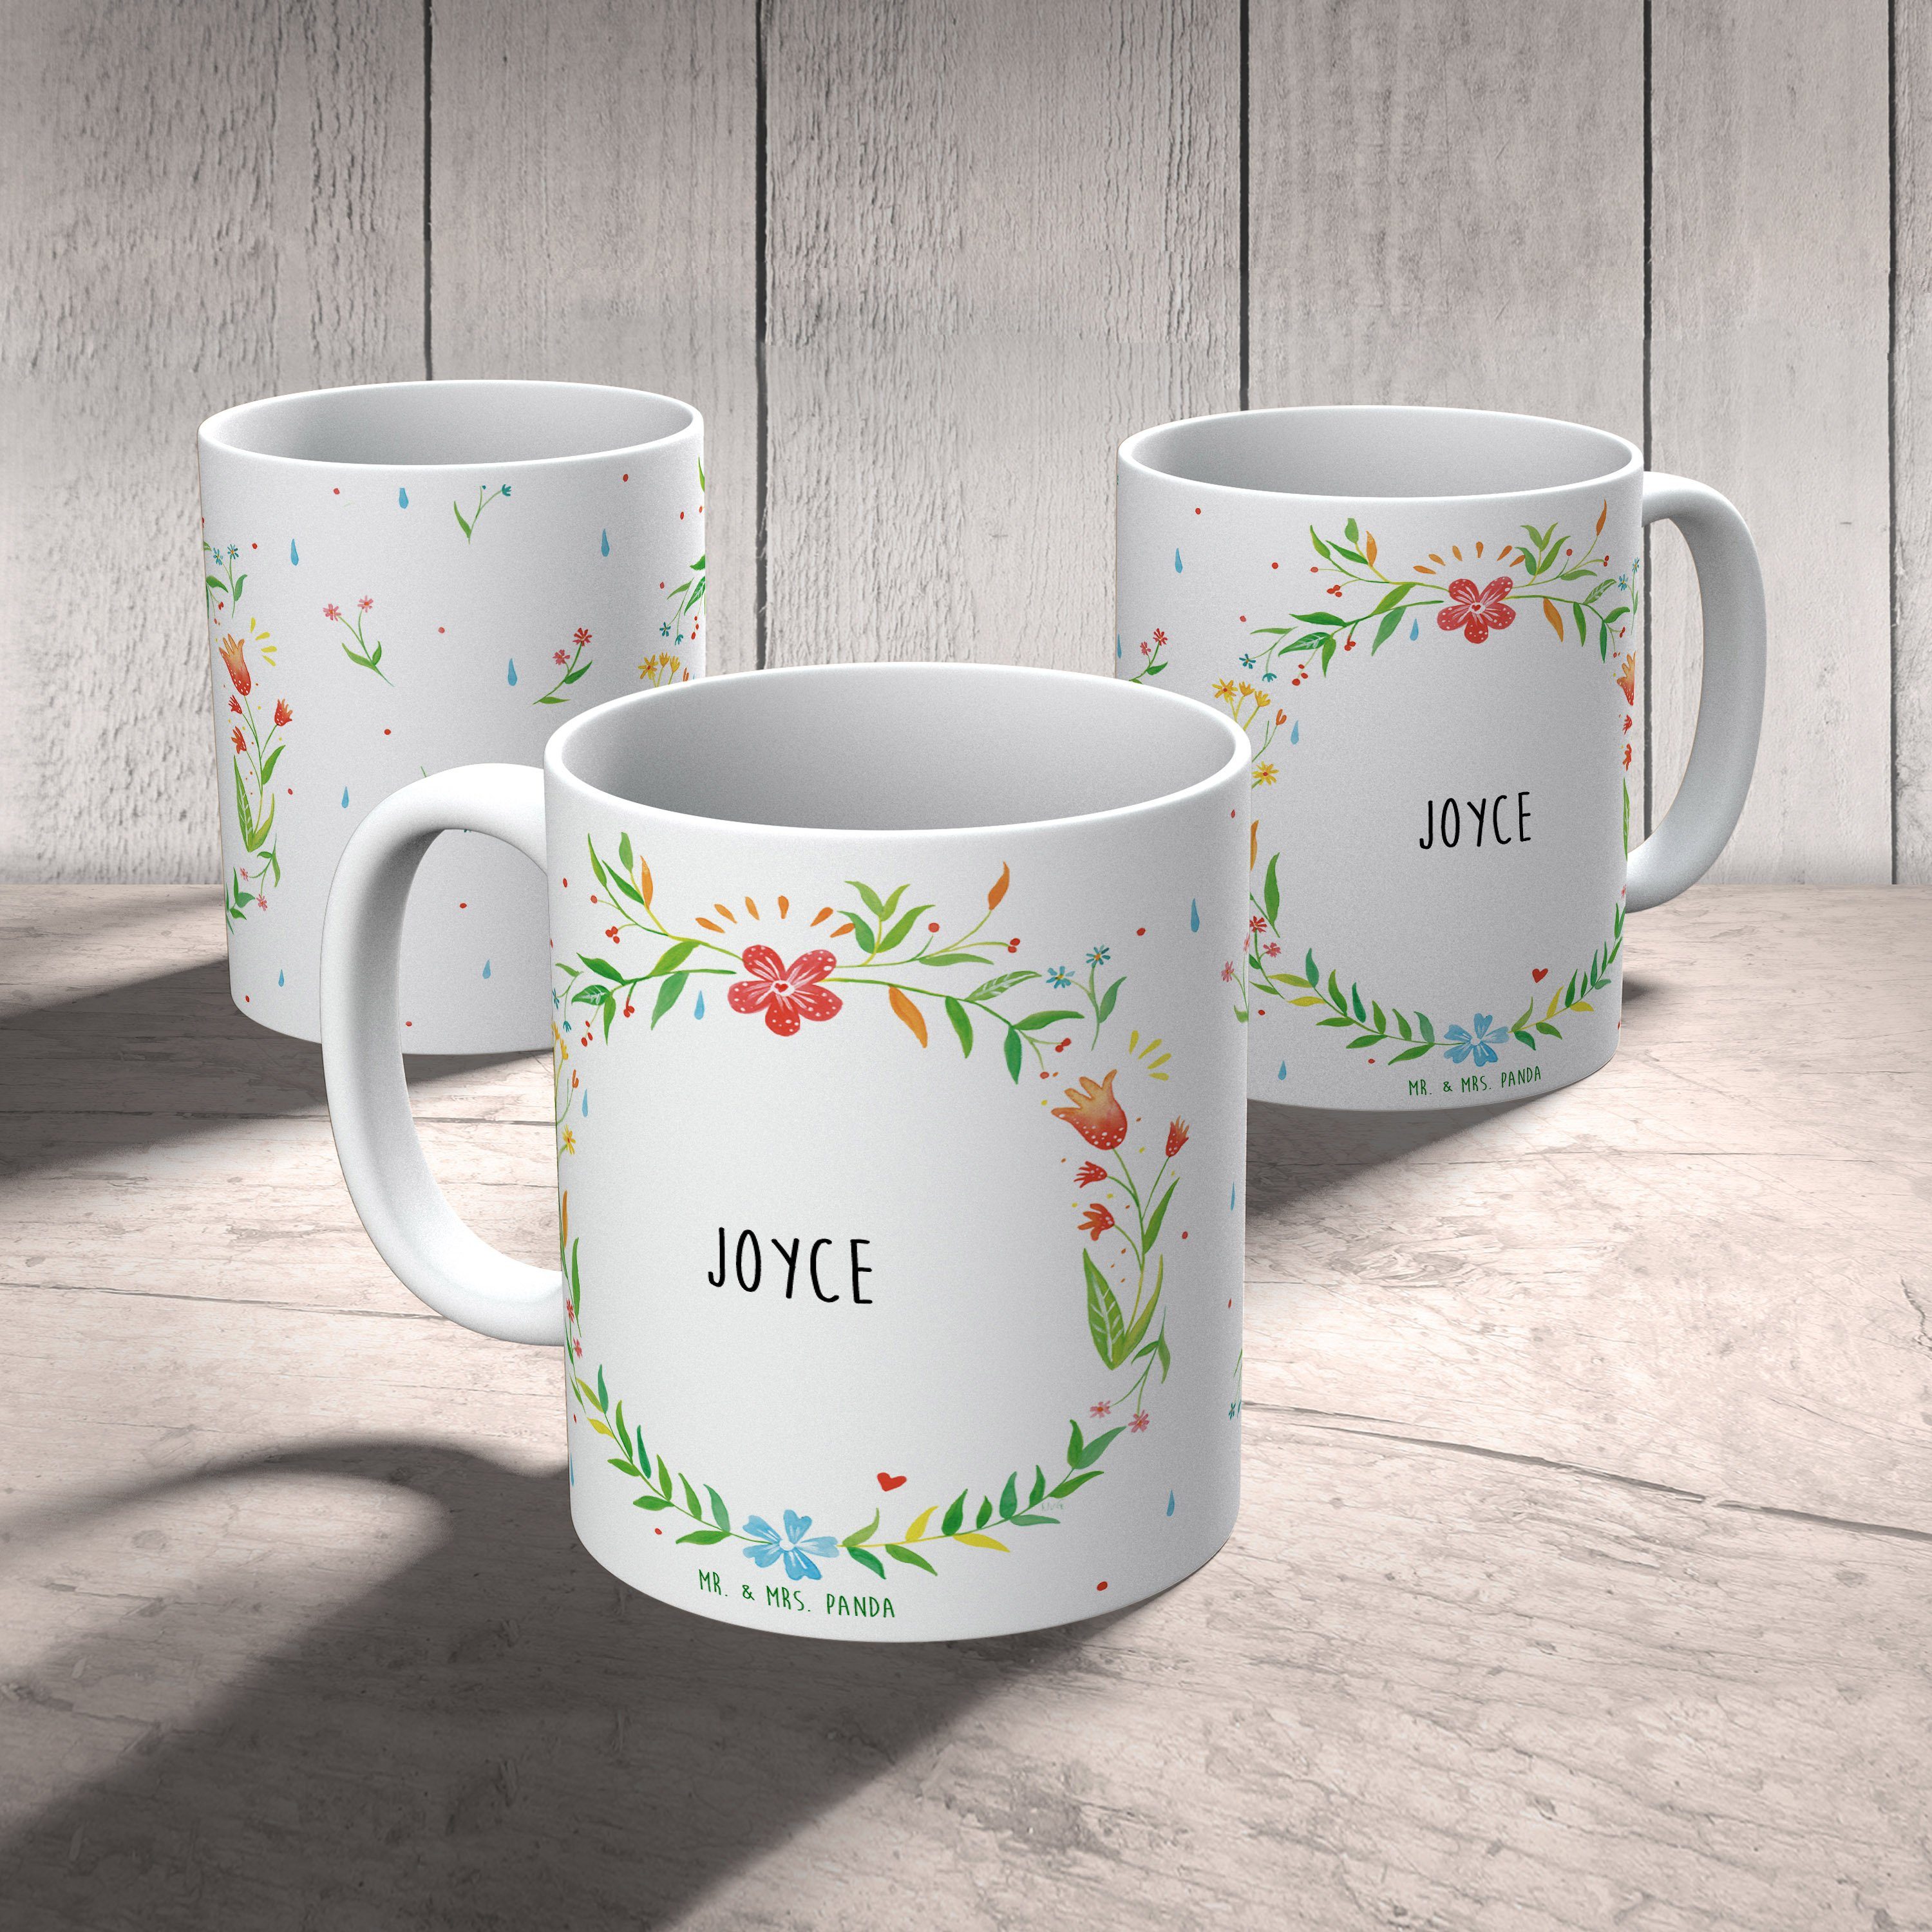 Mr. & T, Mrs. Joyce - Tasse, Panda Porzellantasse, Geschenk, Tasse Keramik Keramiktasse, Kaffeetasse